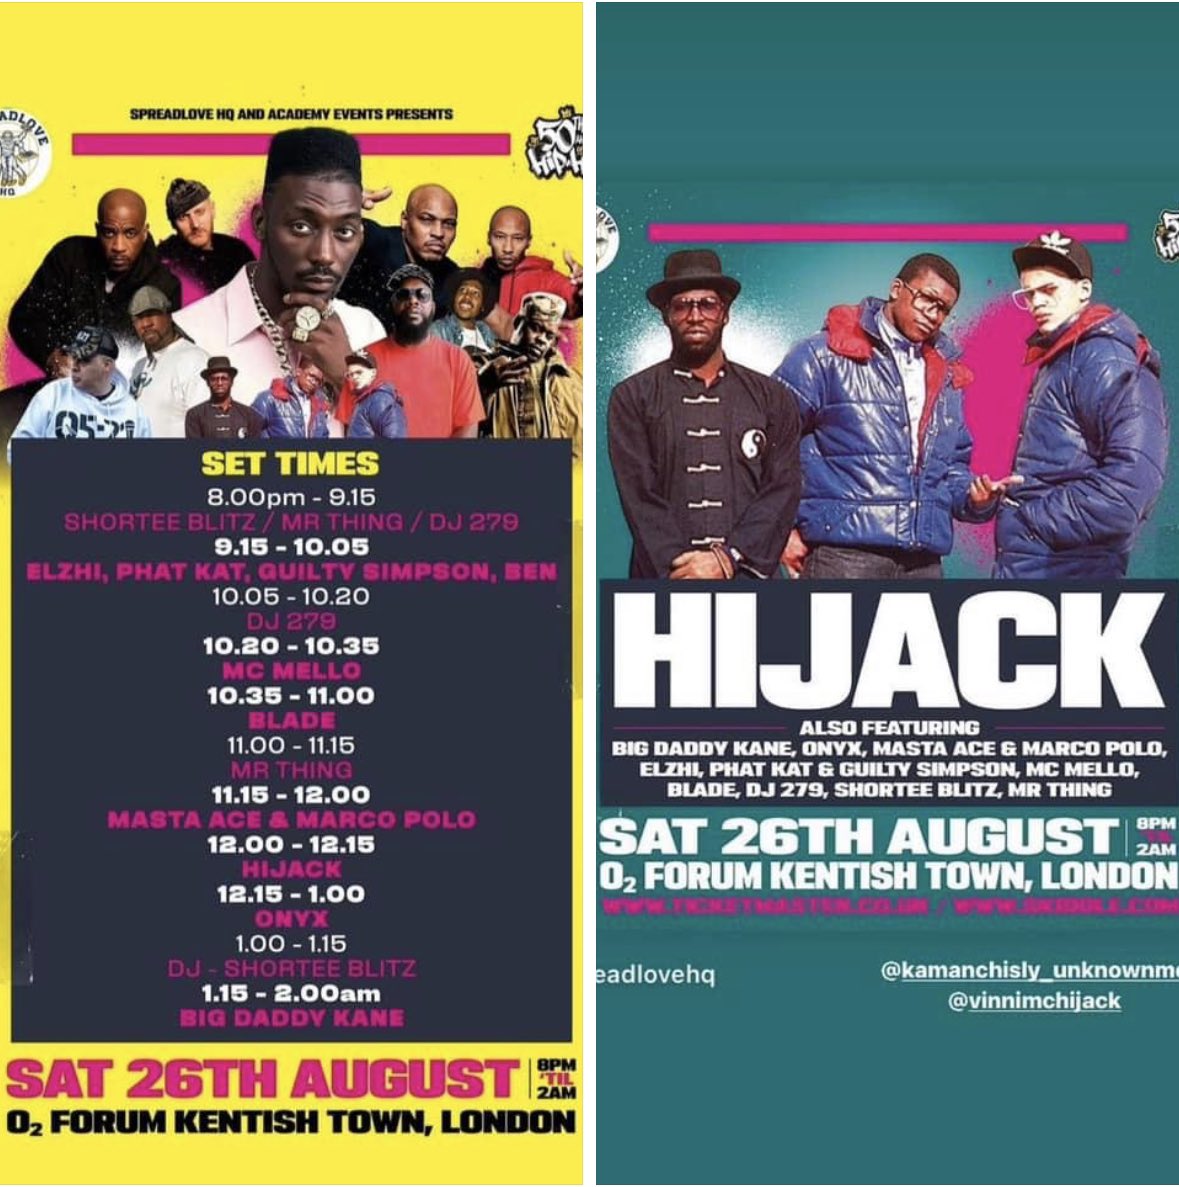 #HIJACK #hijack4life 💟☯️ to do a 15 min slot 12-12.15am at #kentishtown  #theforum #hiphop50 #happyanniversary #50 
26th August Saturday..Kentish Town…The Forum 
hijacktheterroristgroup.com